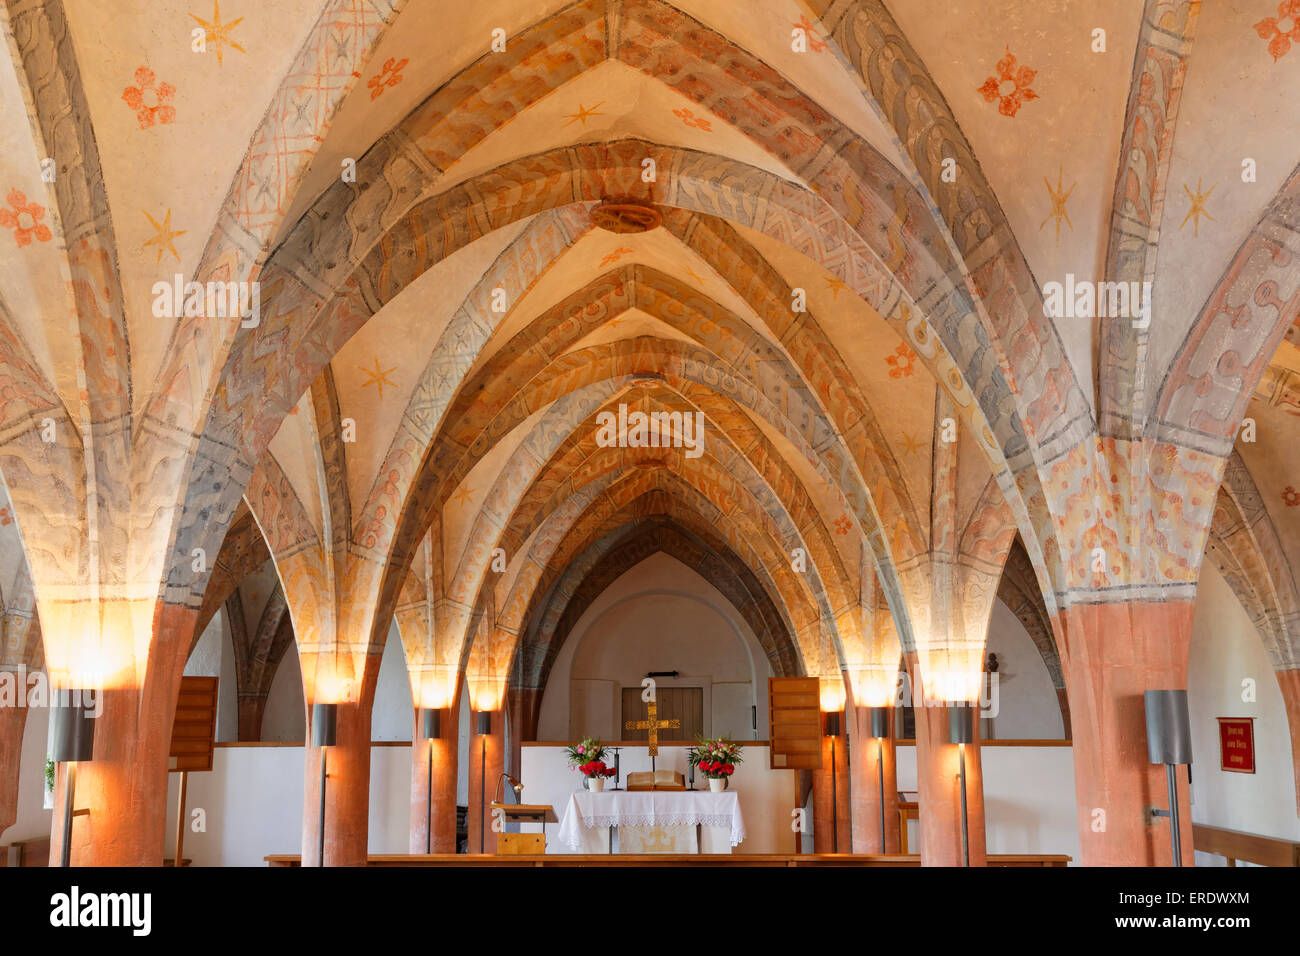 Knight's chapel, Himmelkron monastery, Himmelkron, Upper Franconia, Franconia, Bavaria, Germany Stock Photo